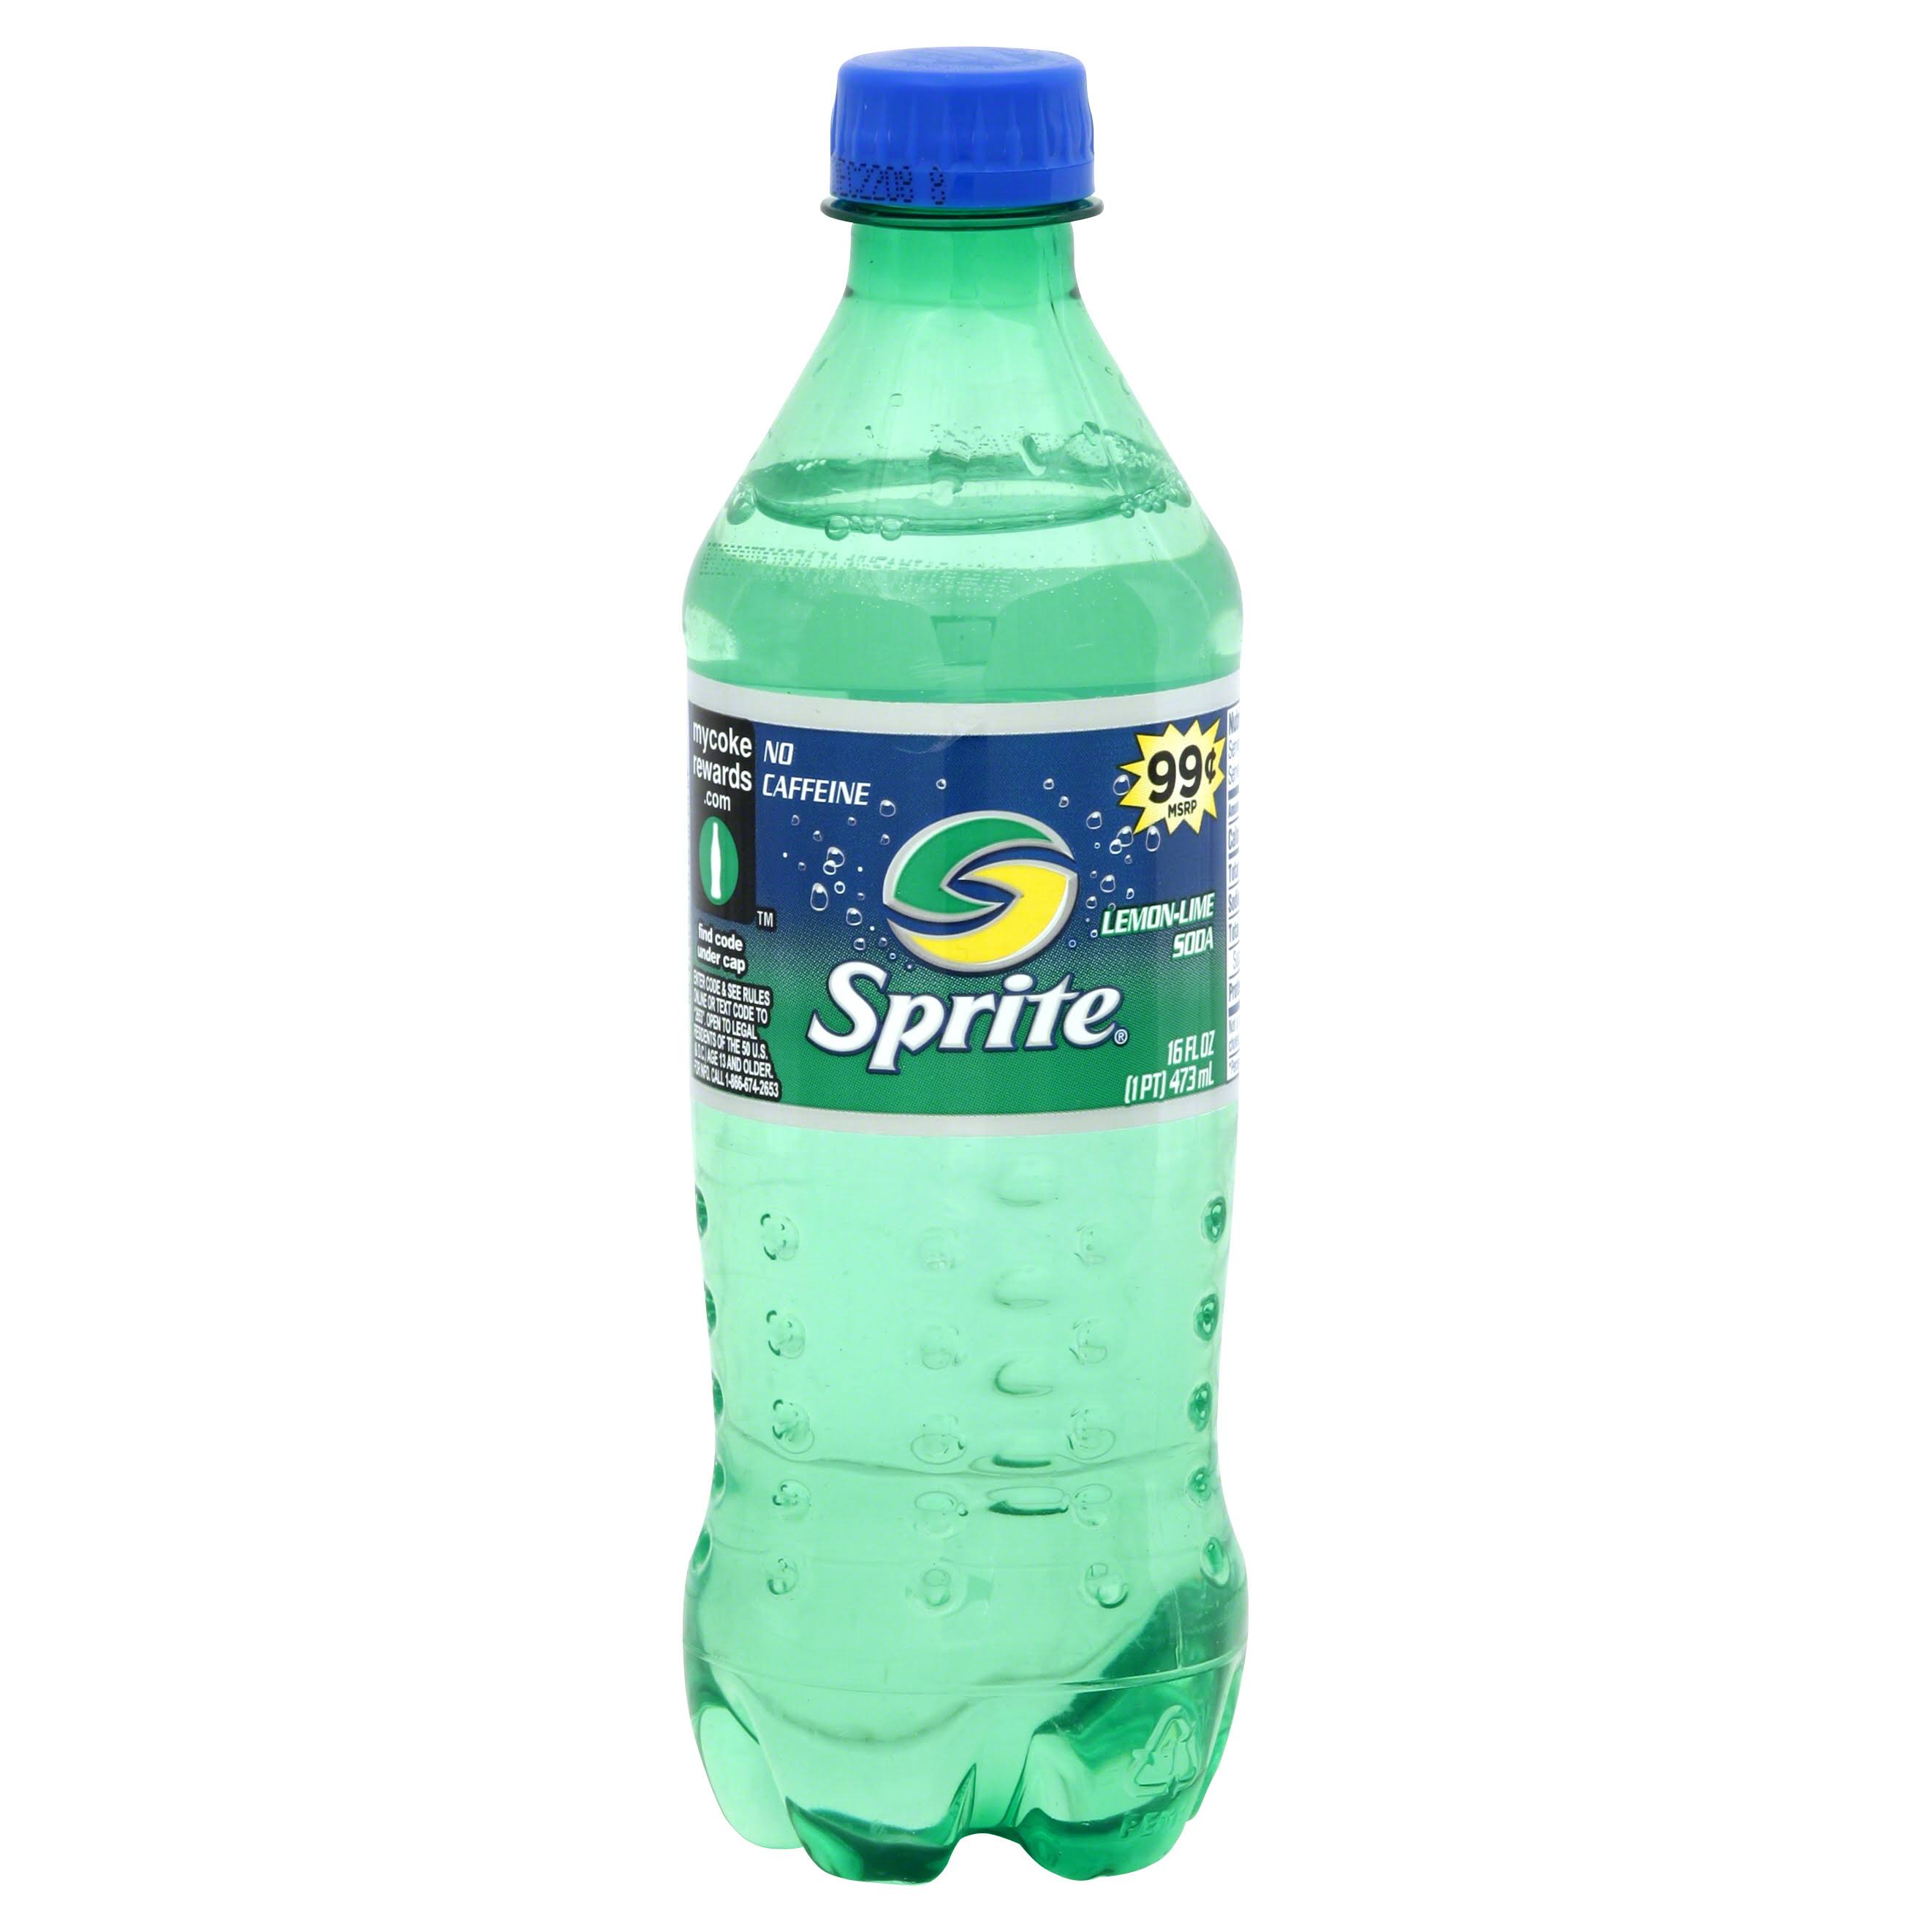 Sprite Soda, Lemon-Lime - 16 oz